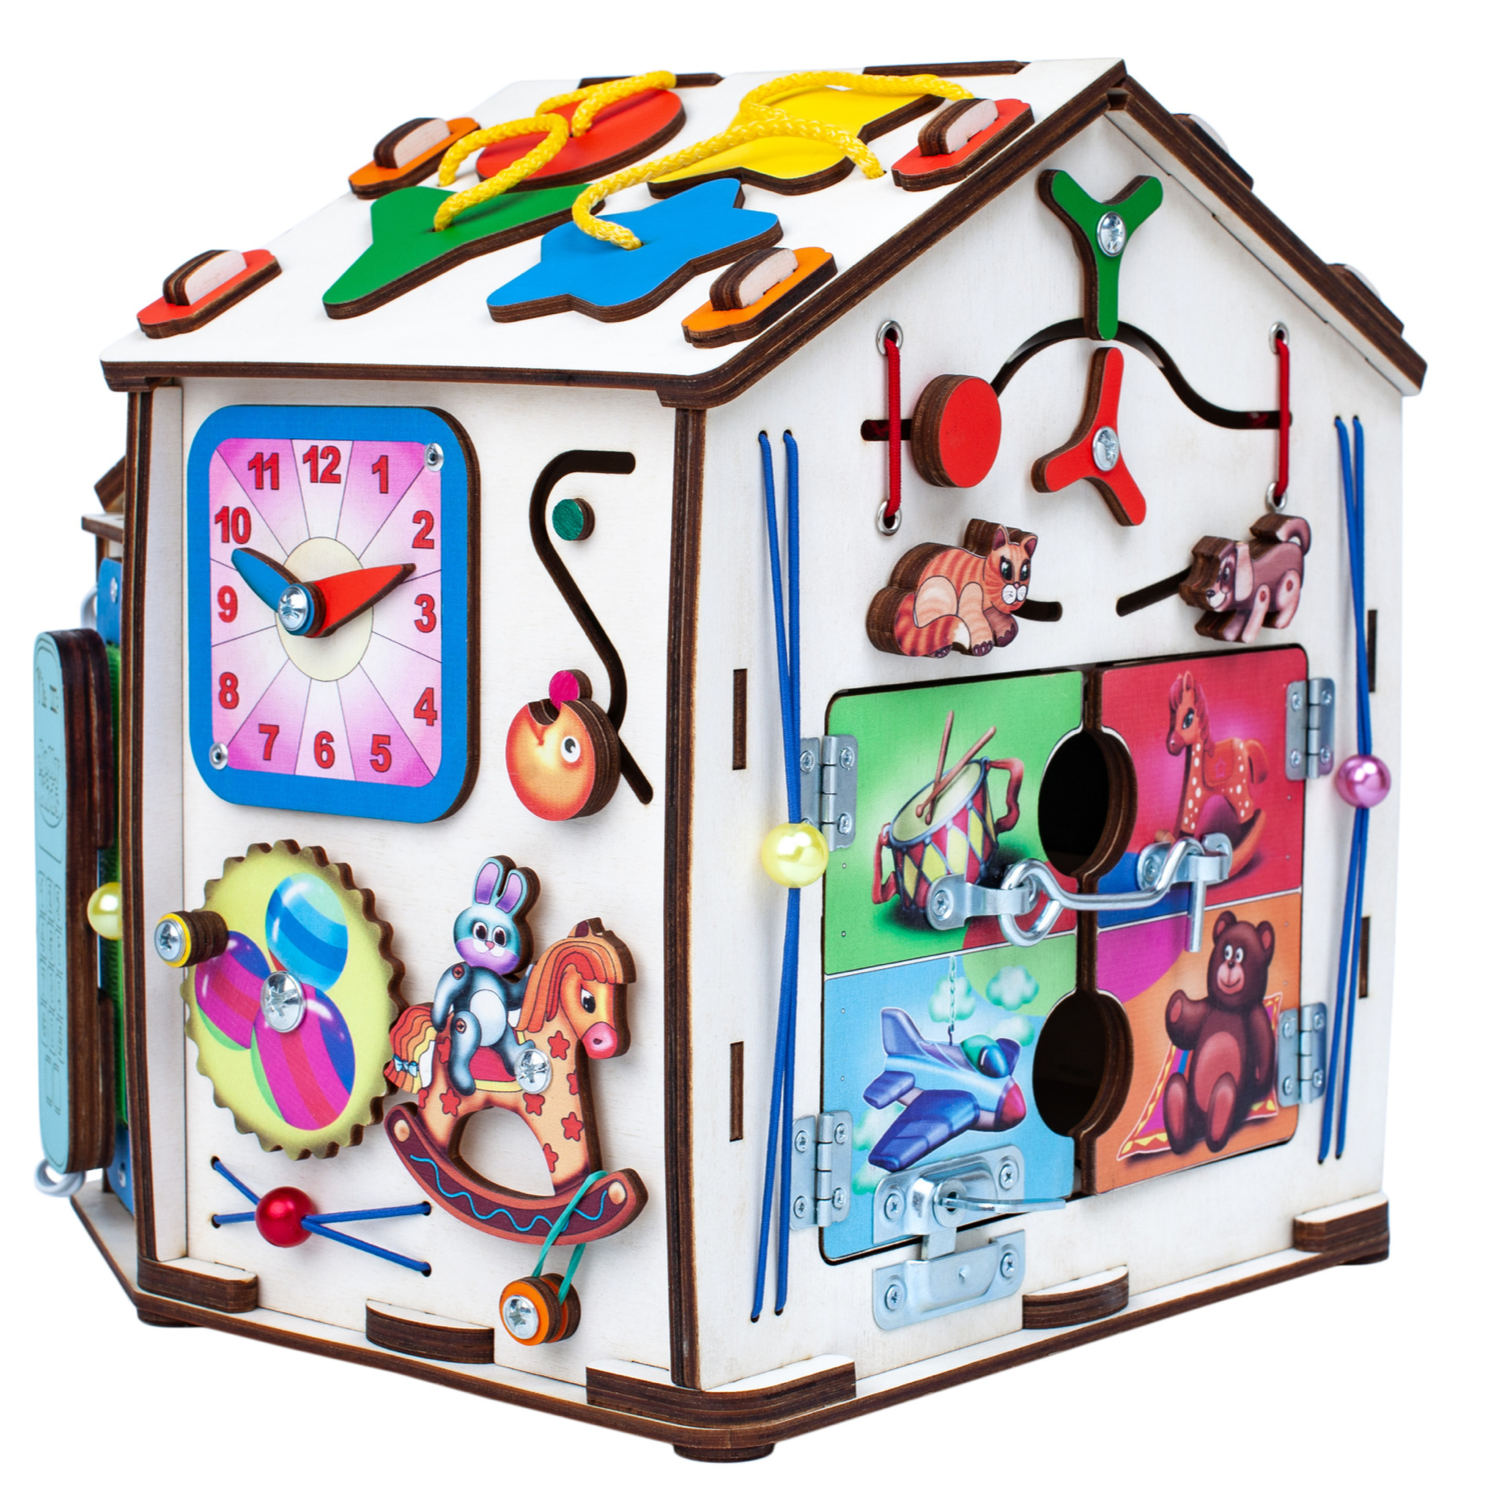 Бизиборд Jolly Kids развивающий домик со светом Игрушки - фото 2